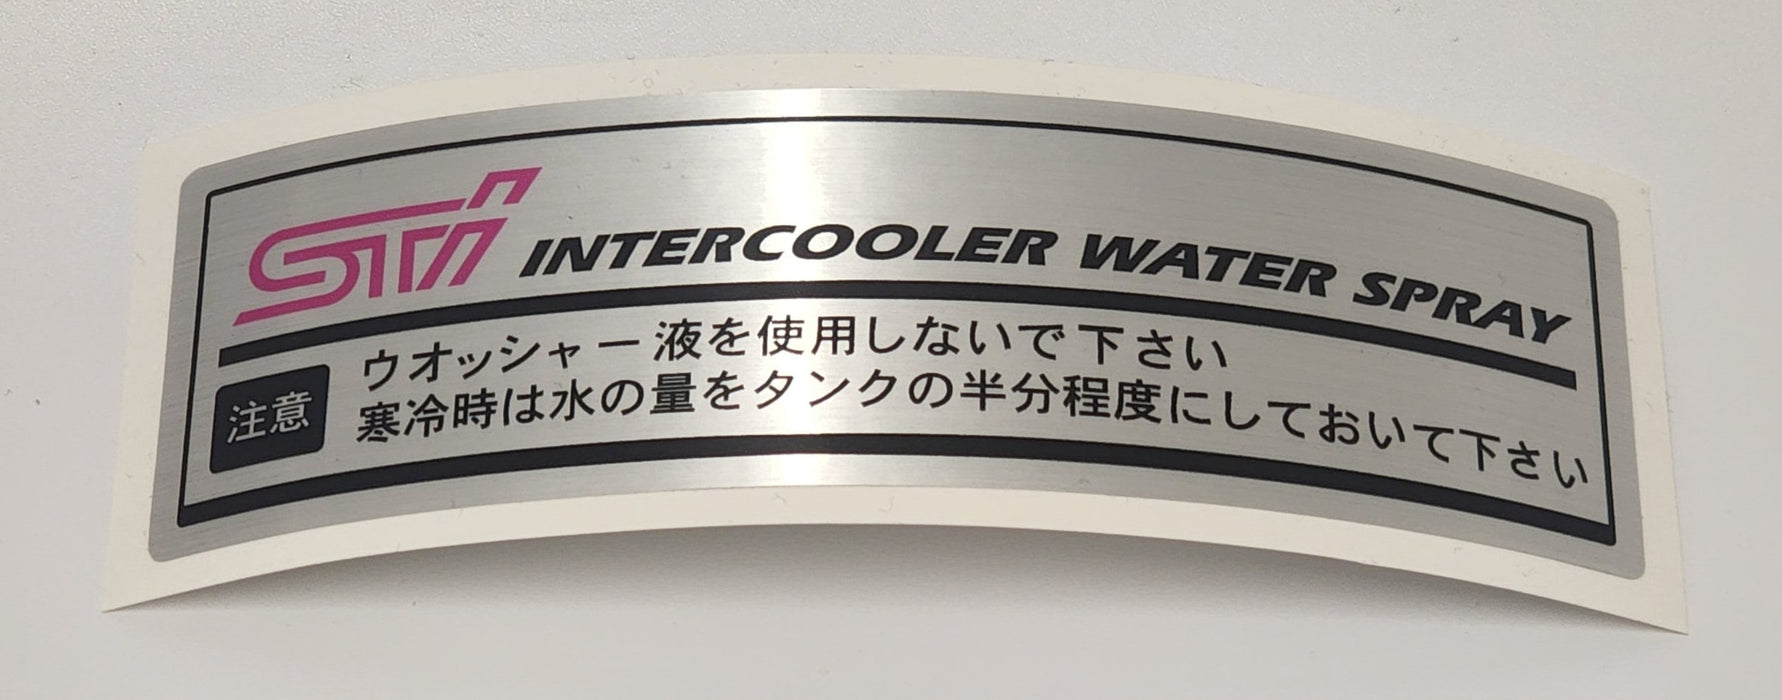 STI Intercooler Water Spray Tank Sticker